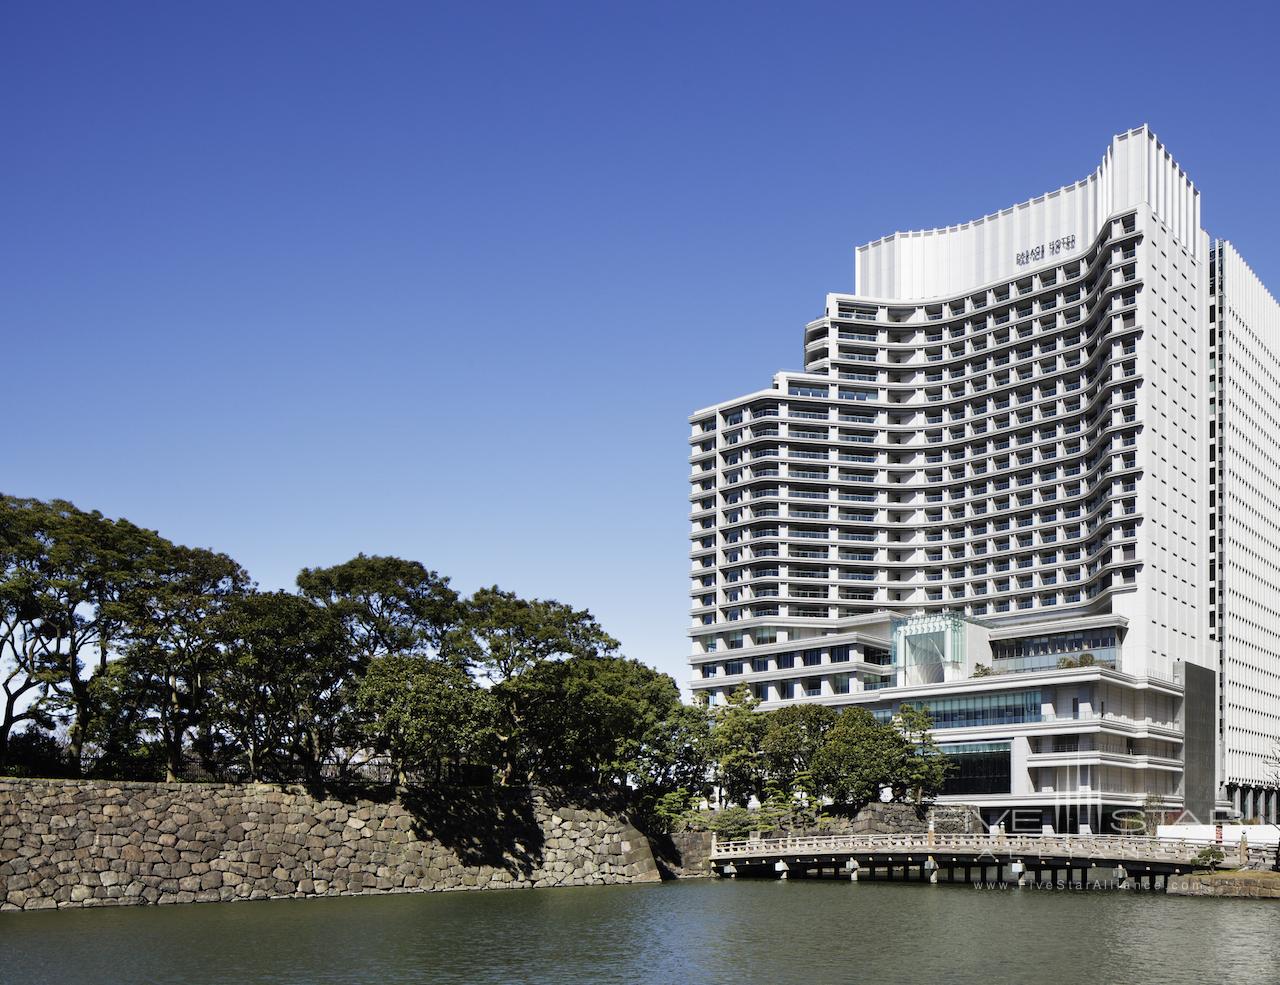 Palace Hotel Tokyo